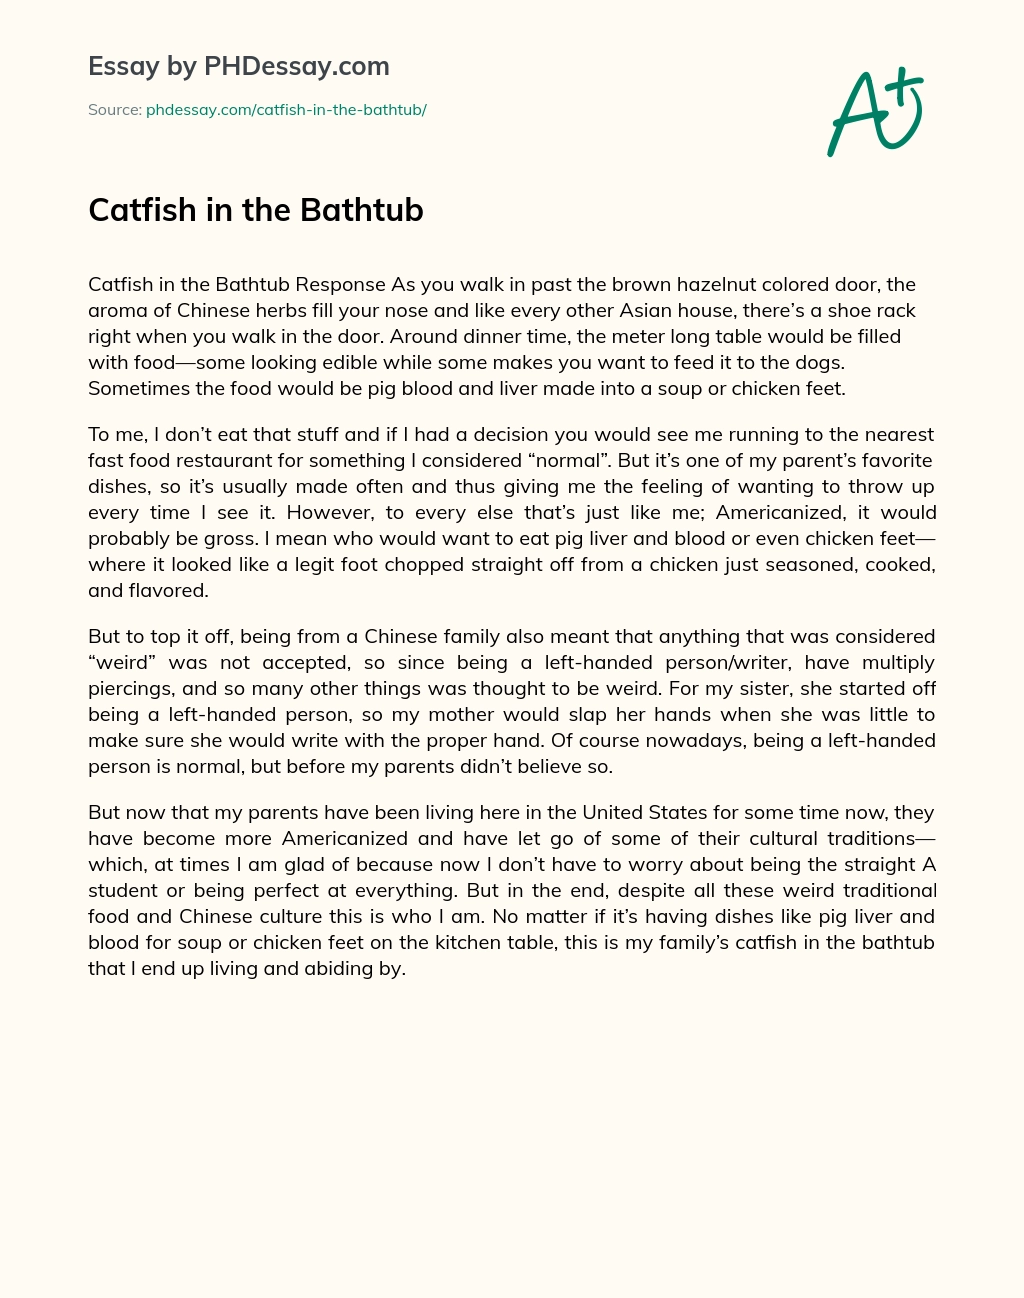 Catfish in the Bathtub essay